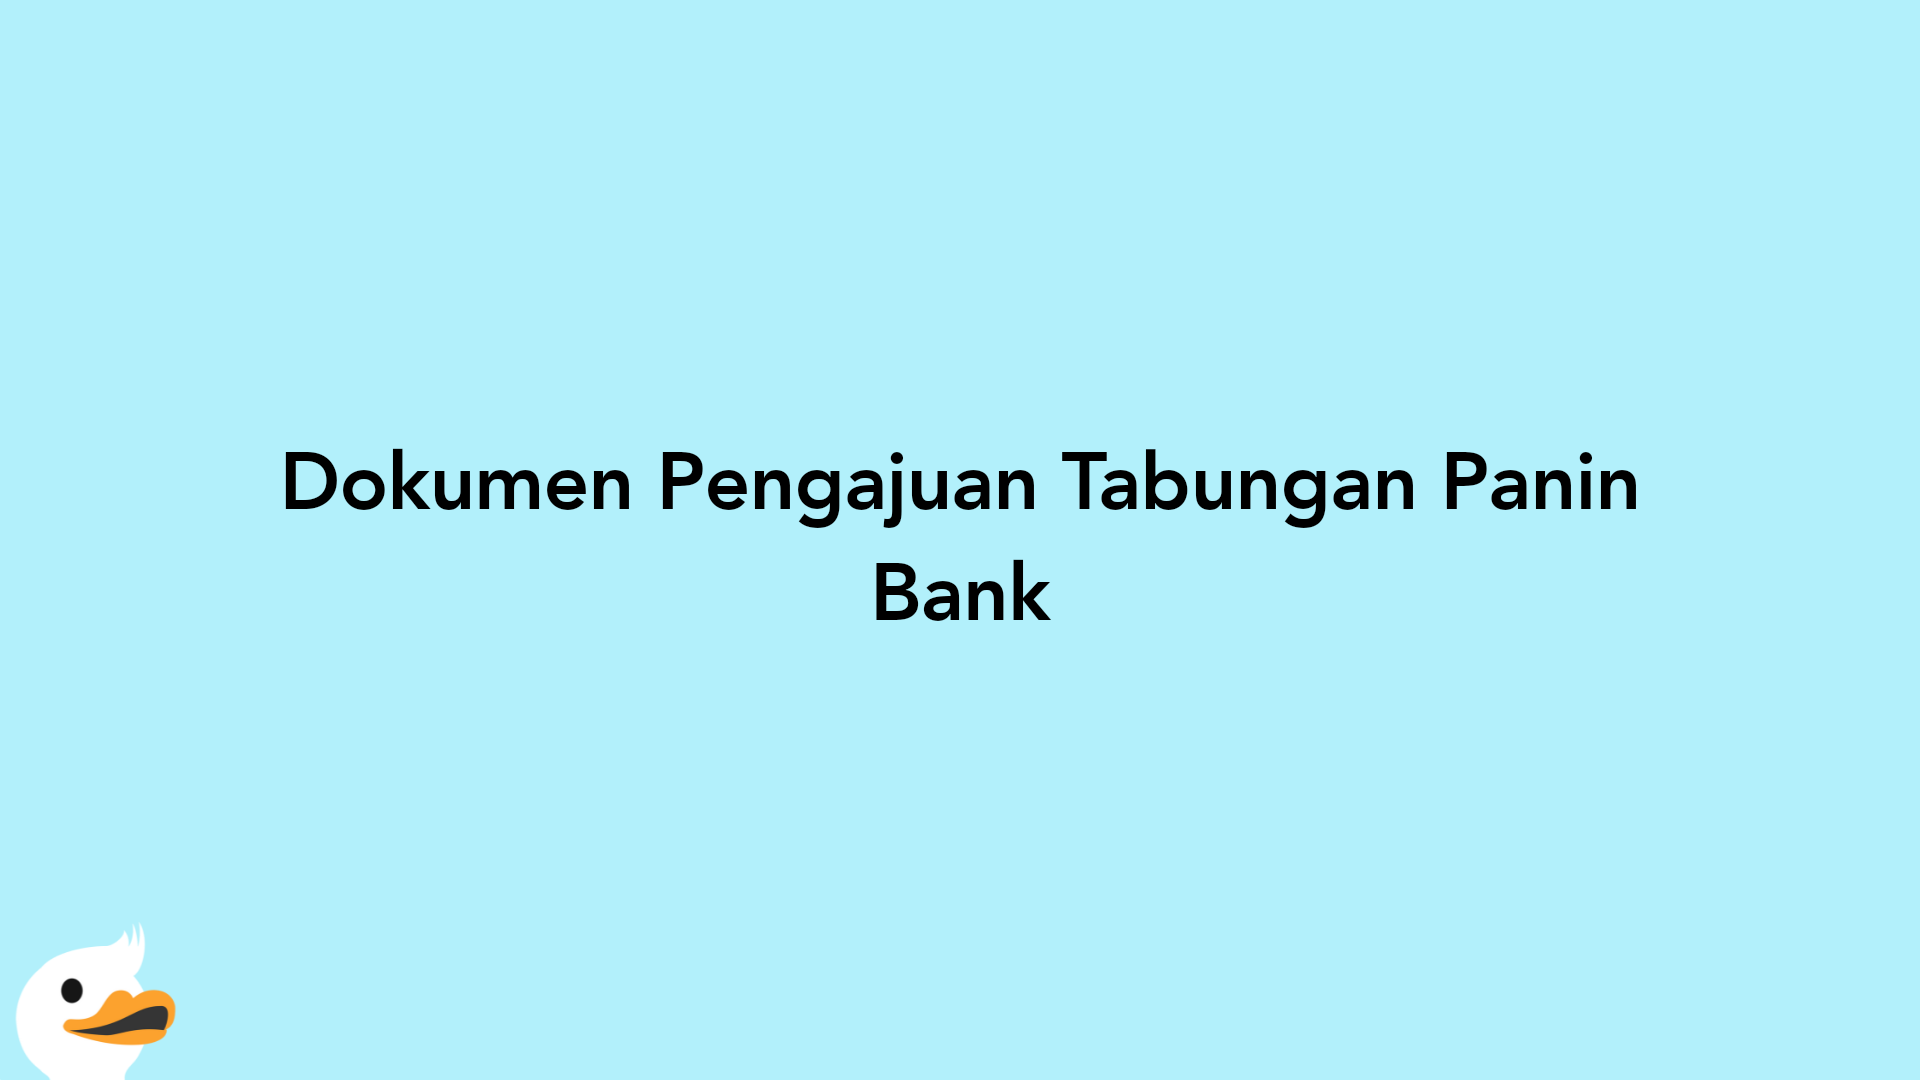 Dokumen Pengajuan Tabungan Panin Bank